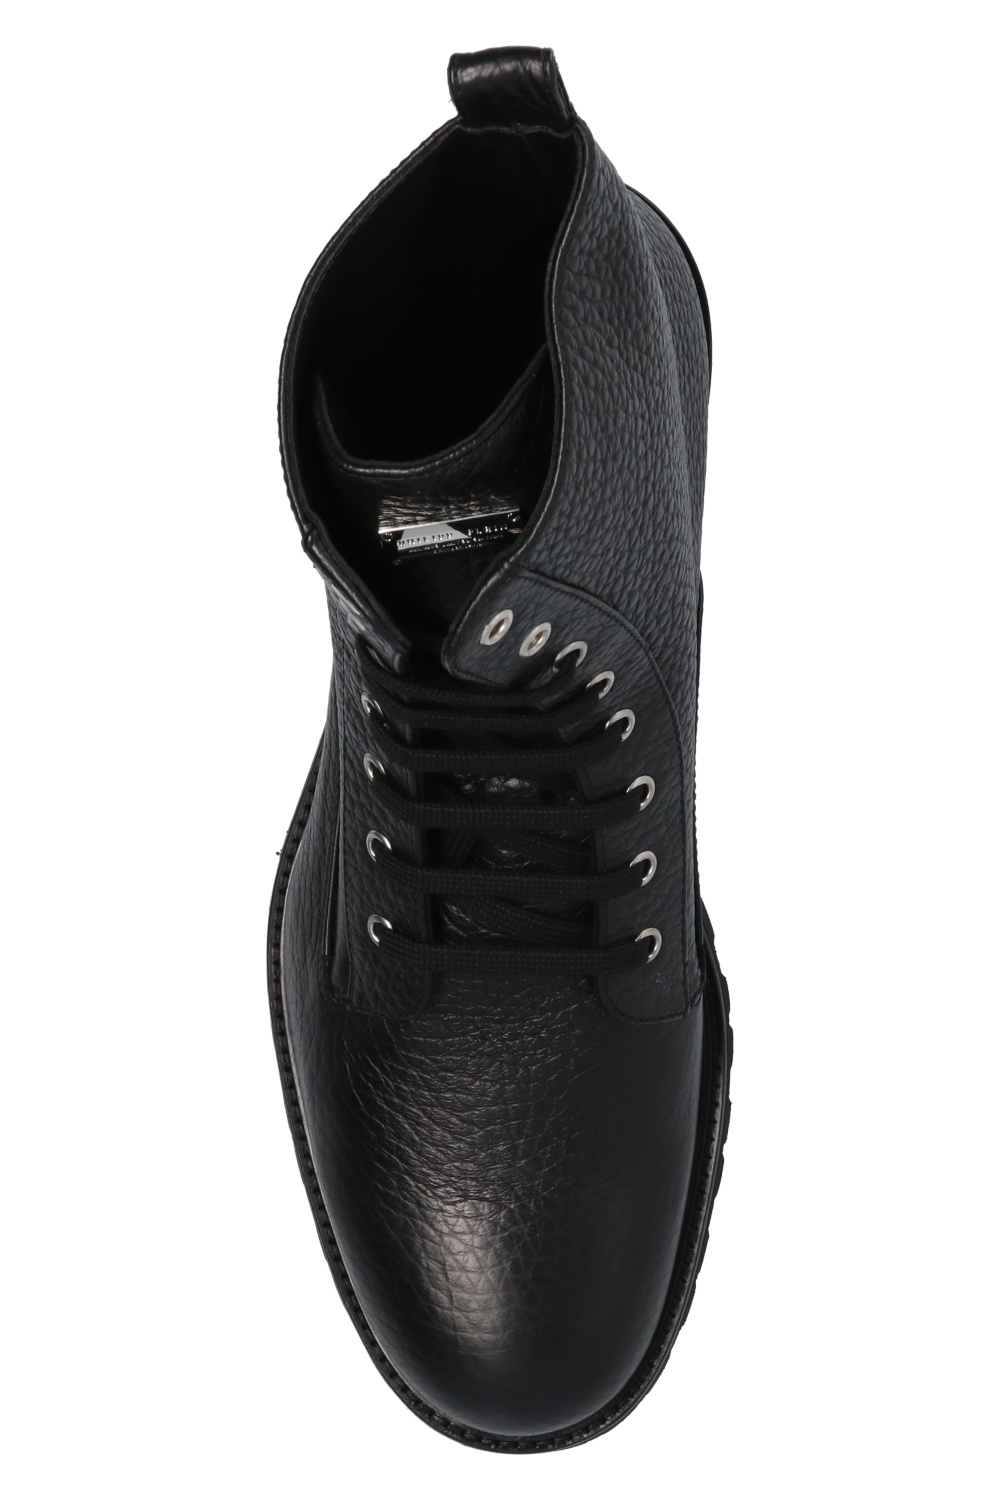 Philipp Plein Leather ankle boots